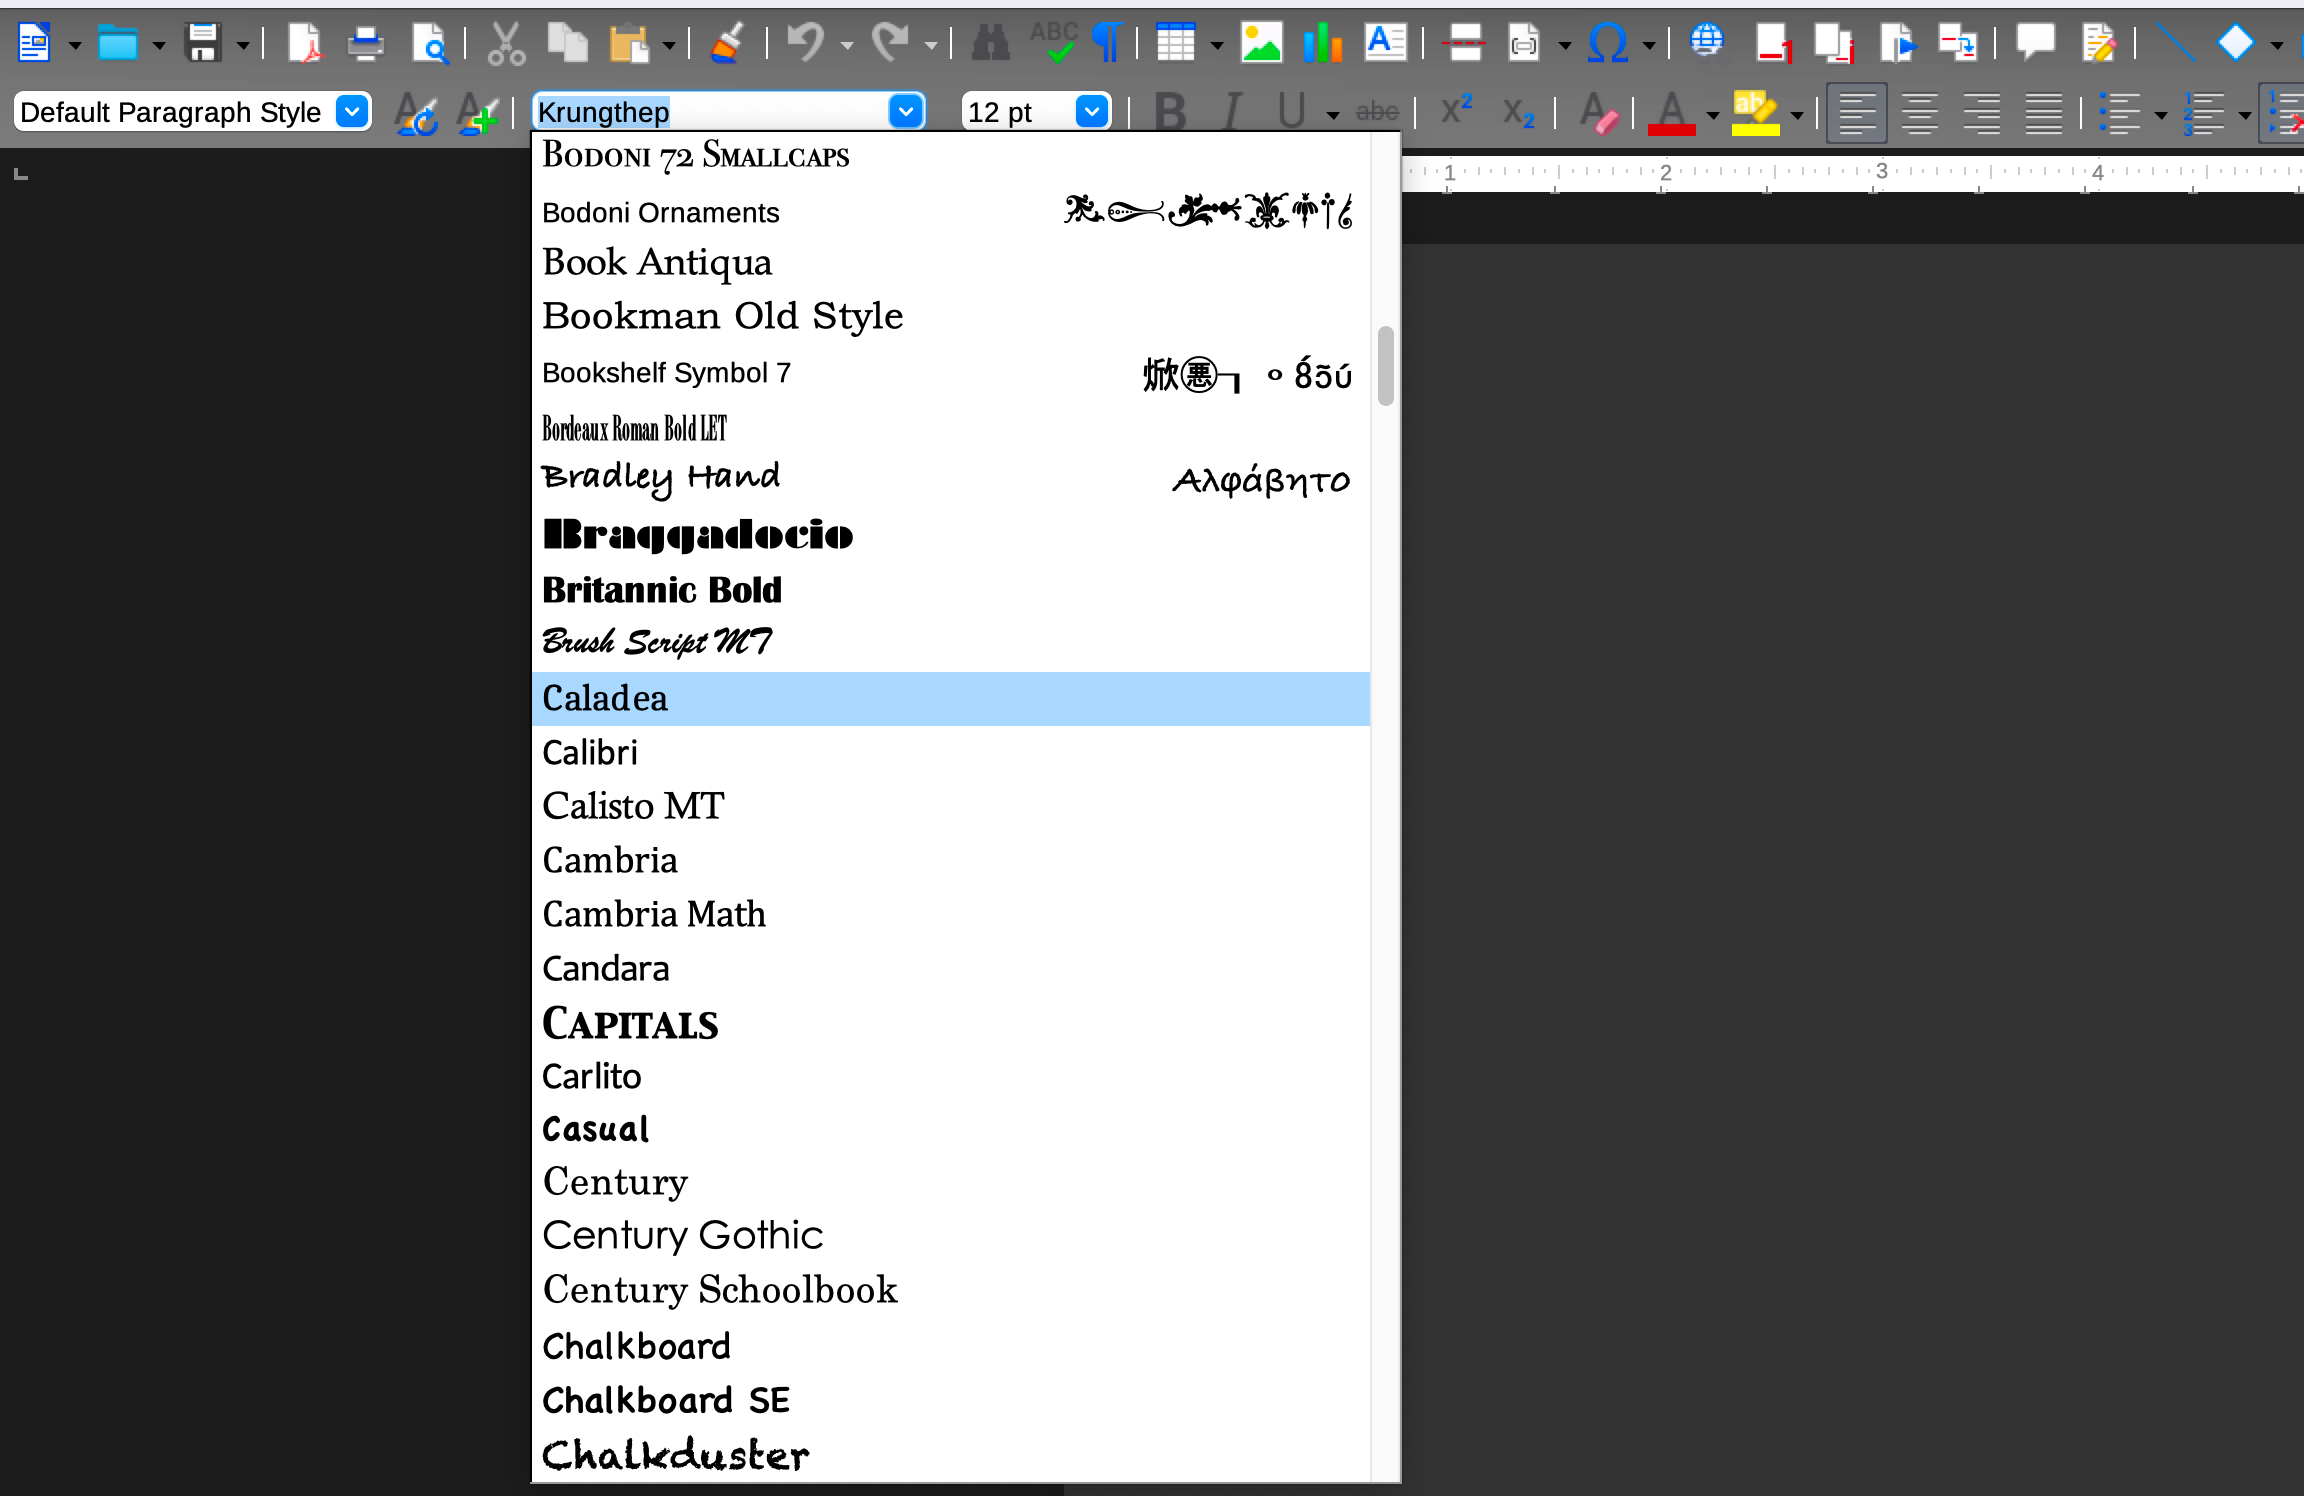 Caladea Font in LibreOffice.